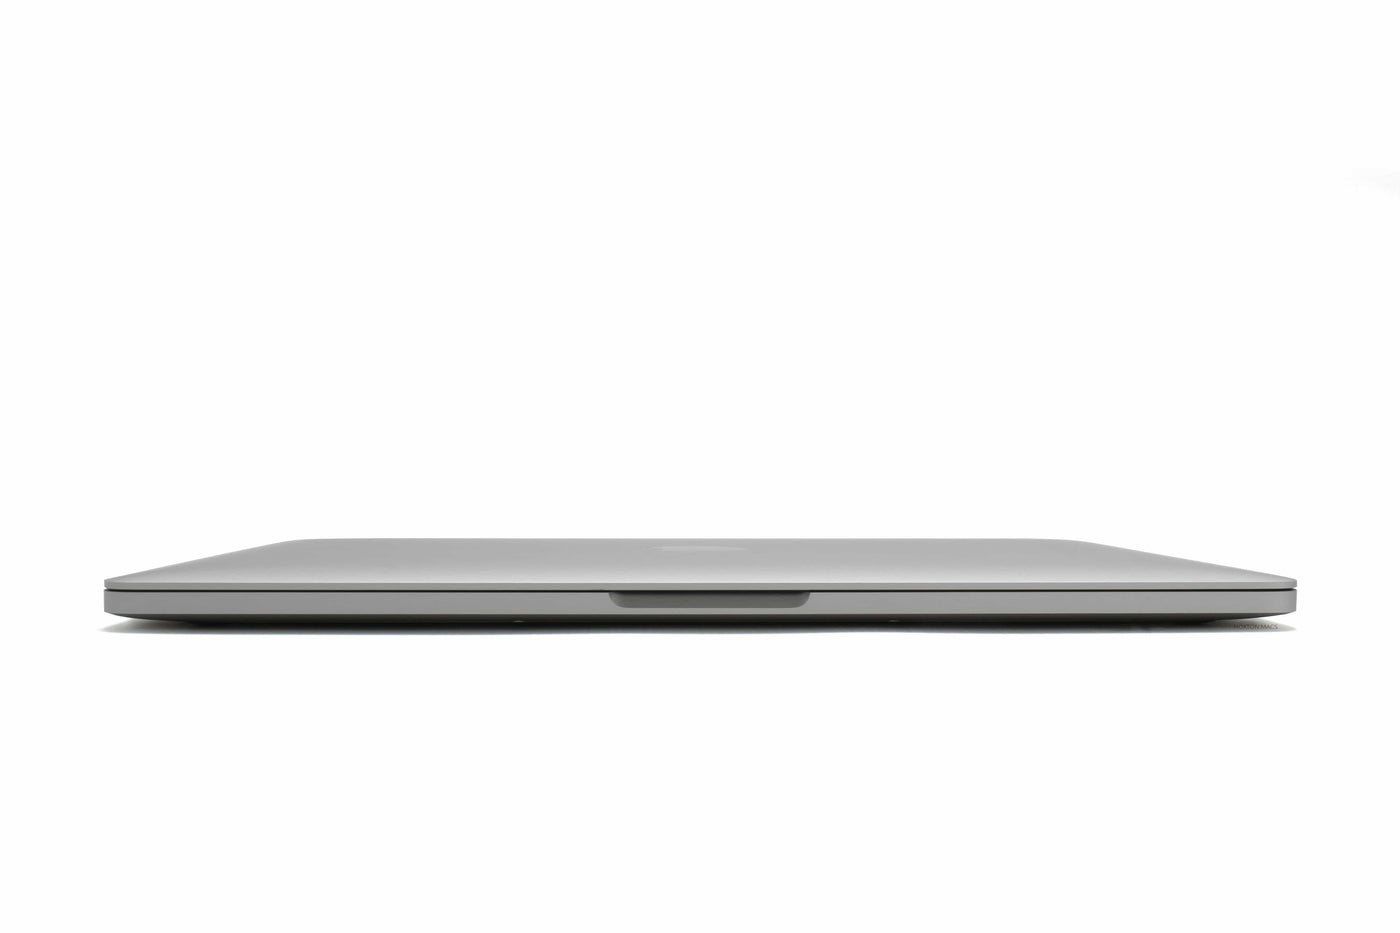 Apple MacBook Pro 13-inch MacBook Pro 13-inch M1 (Silver, 2020) - Excellent